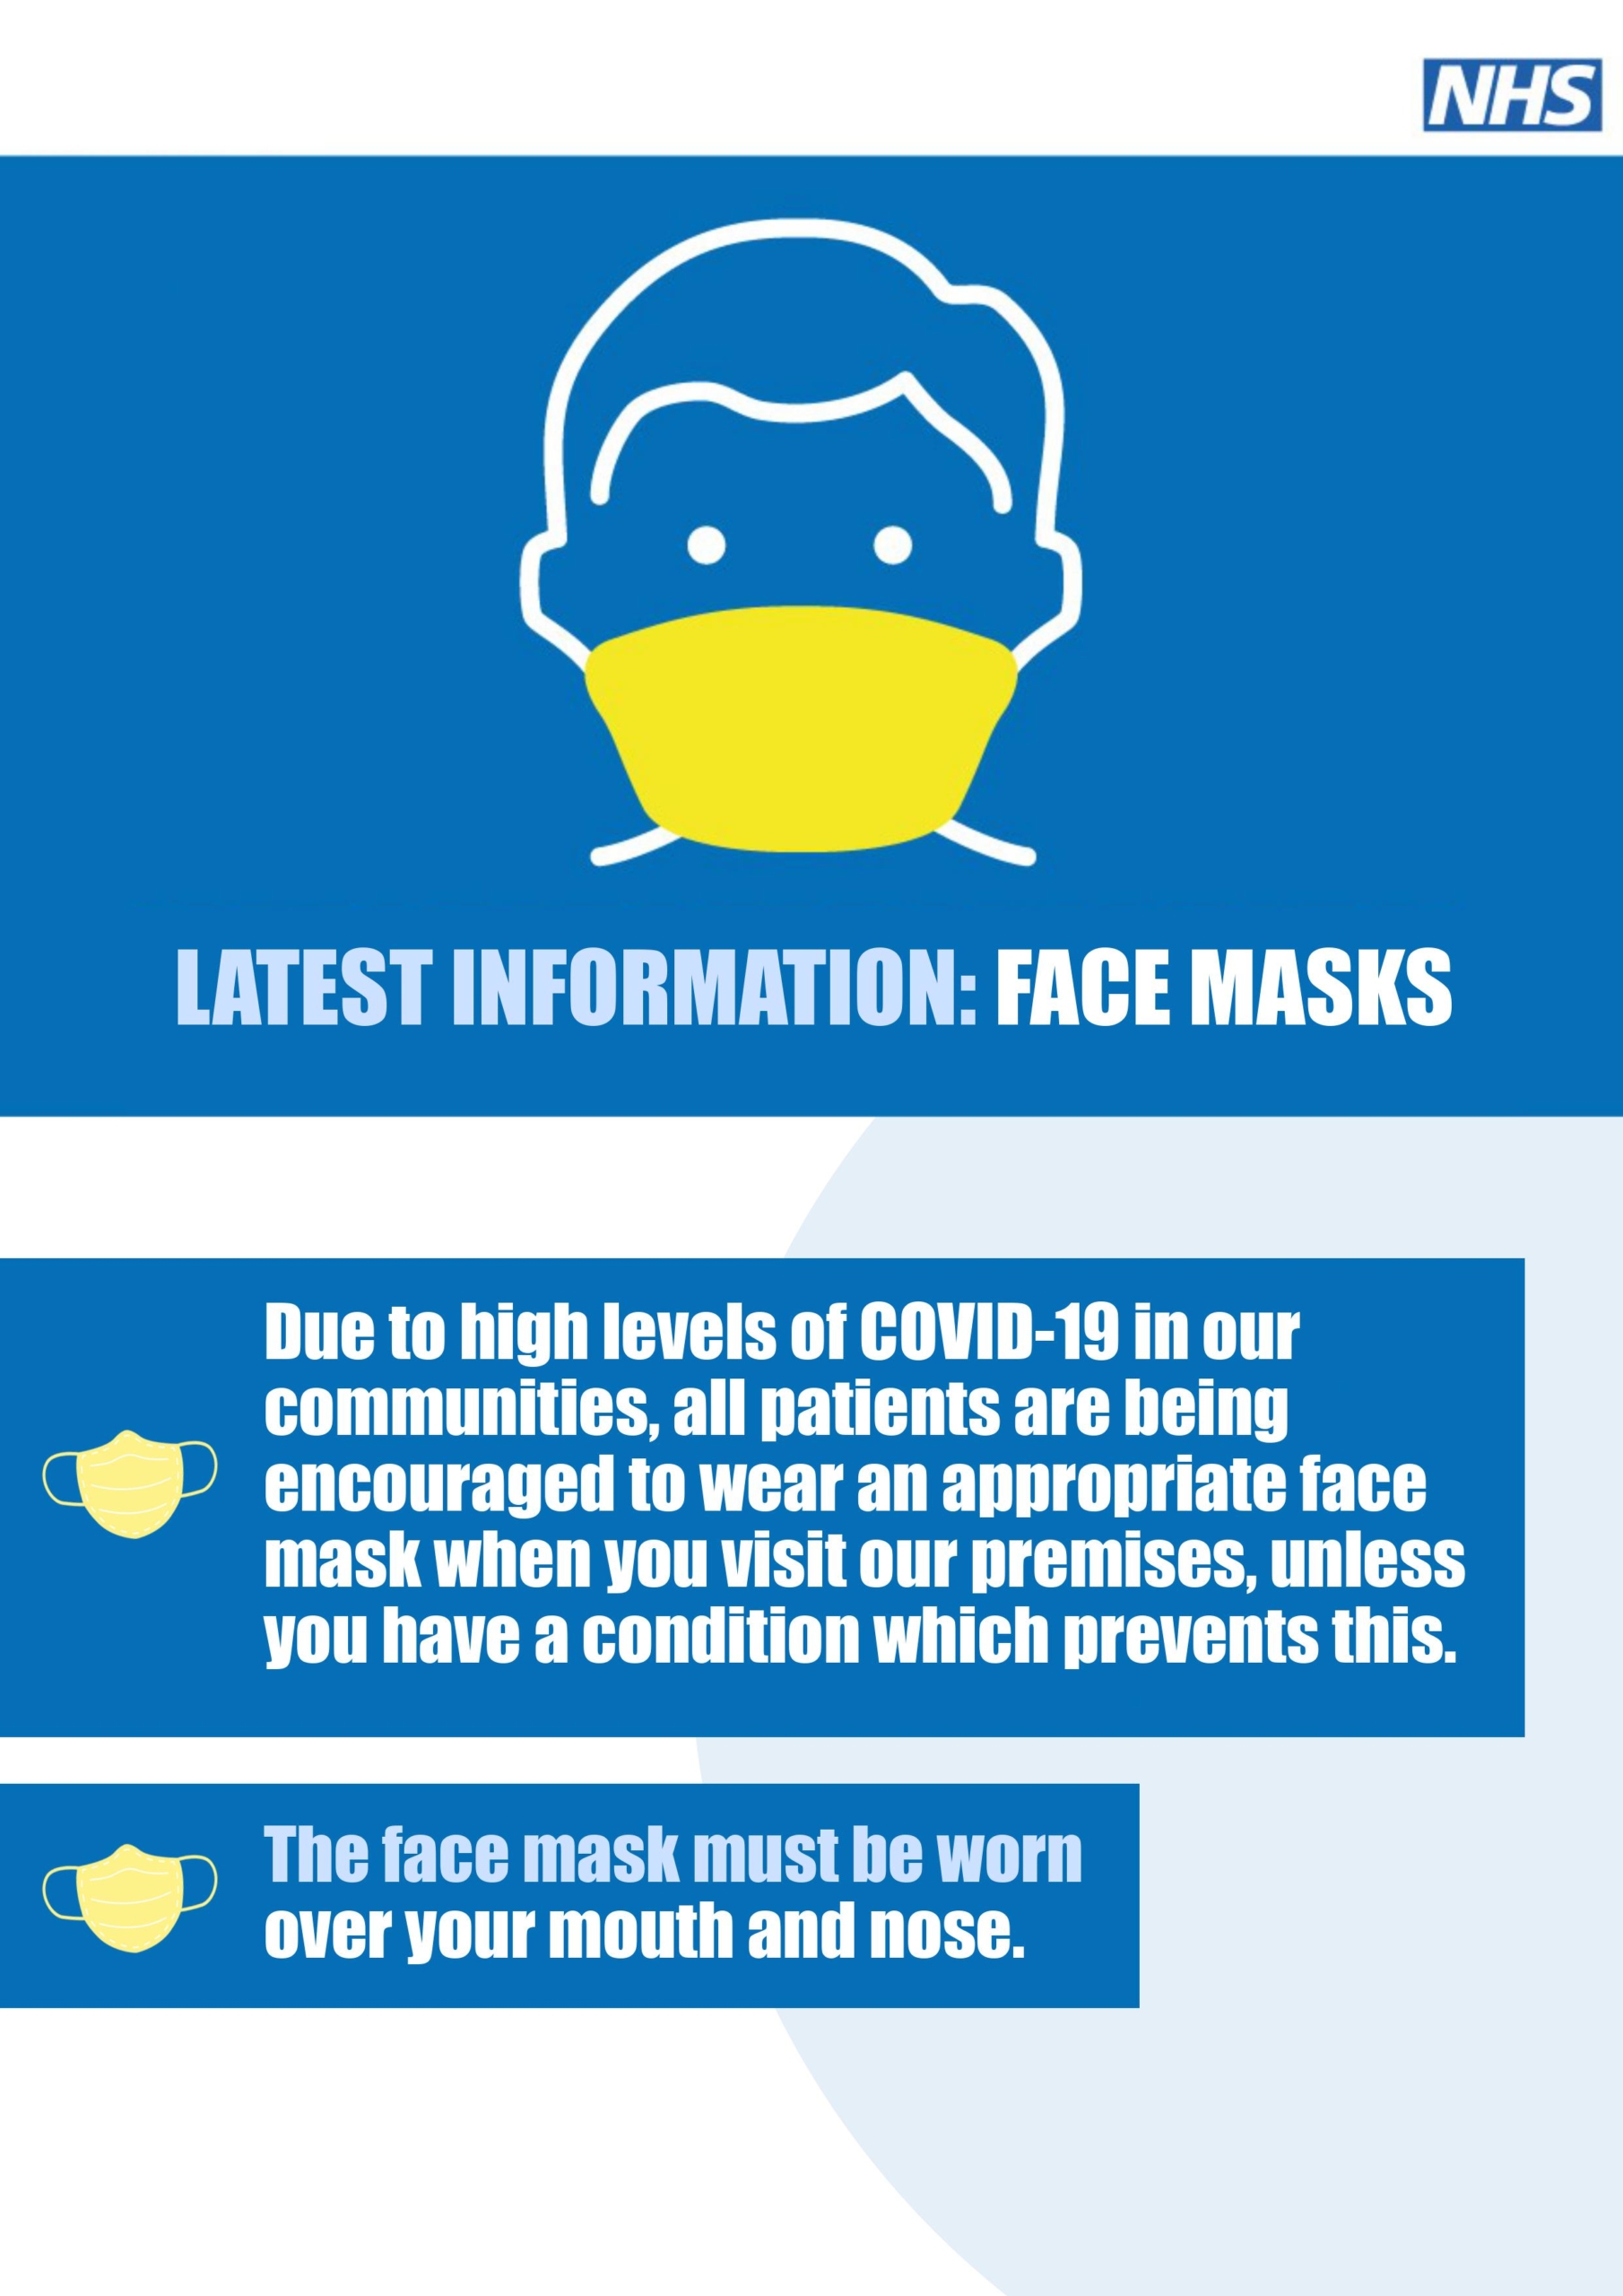 face masks must be worn patient leaflet